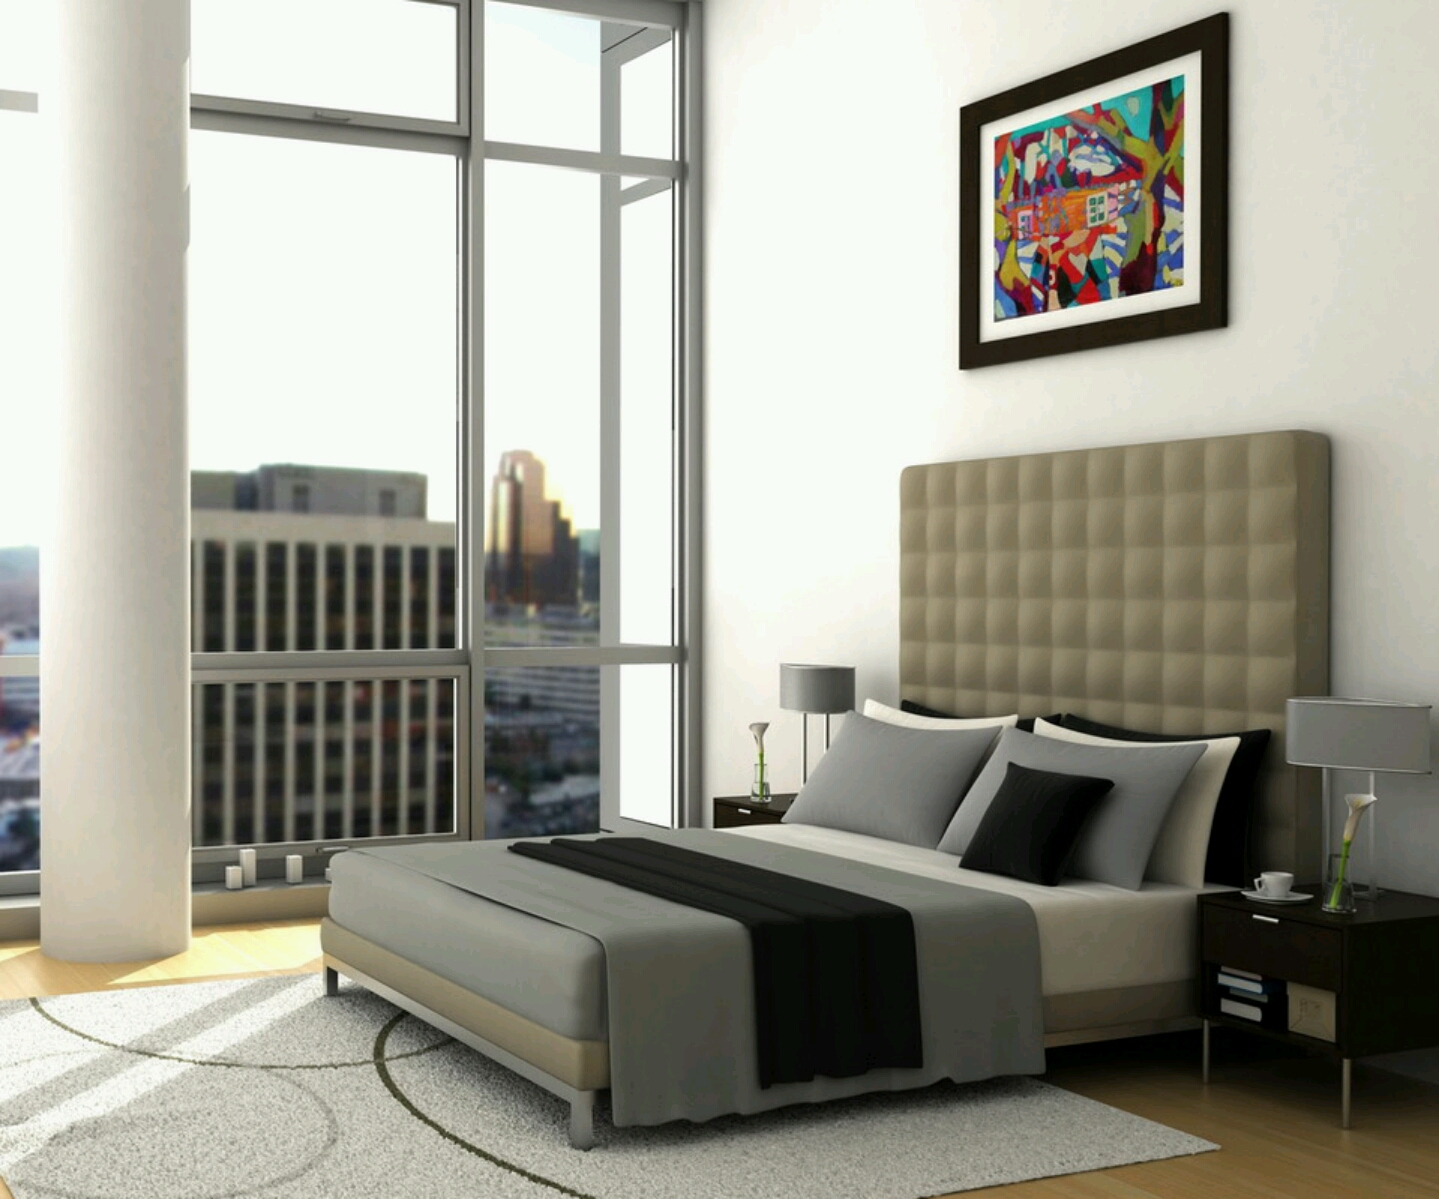 Modern Home Interior Bedroom